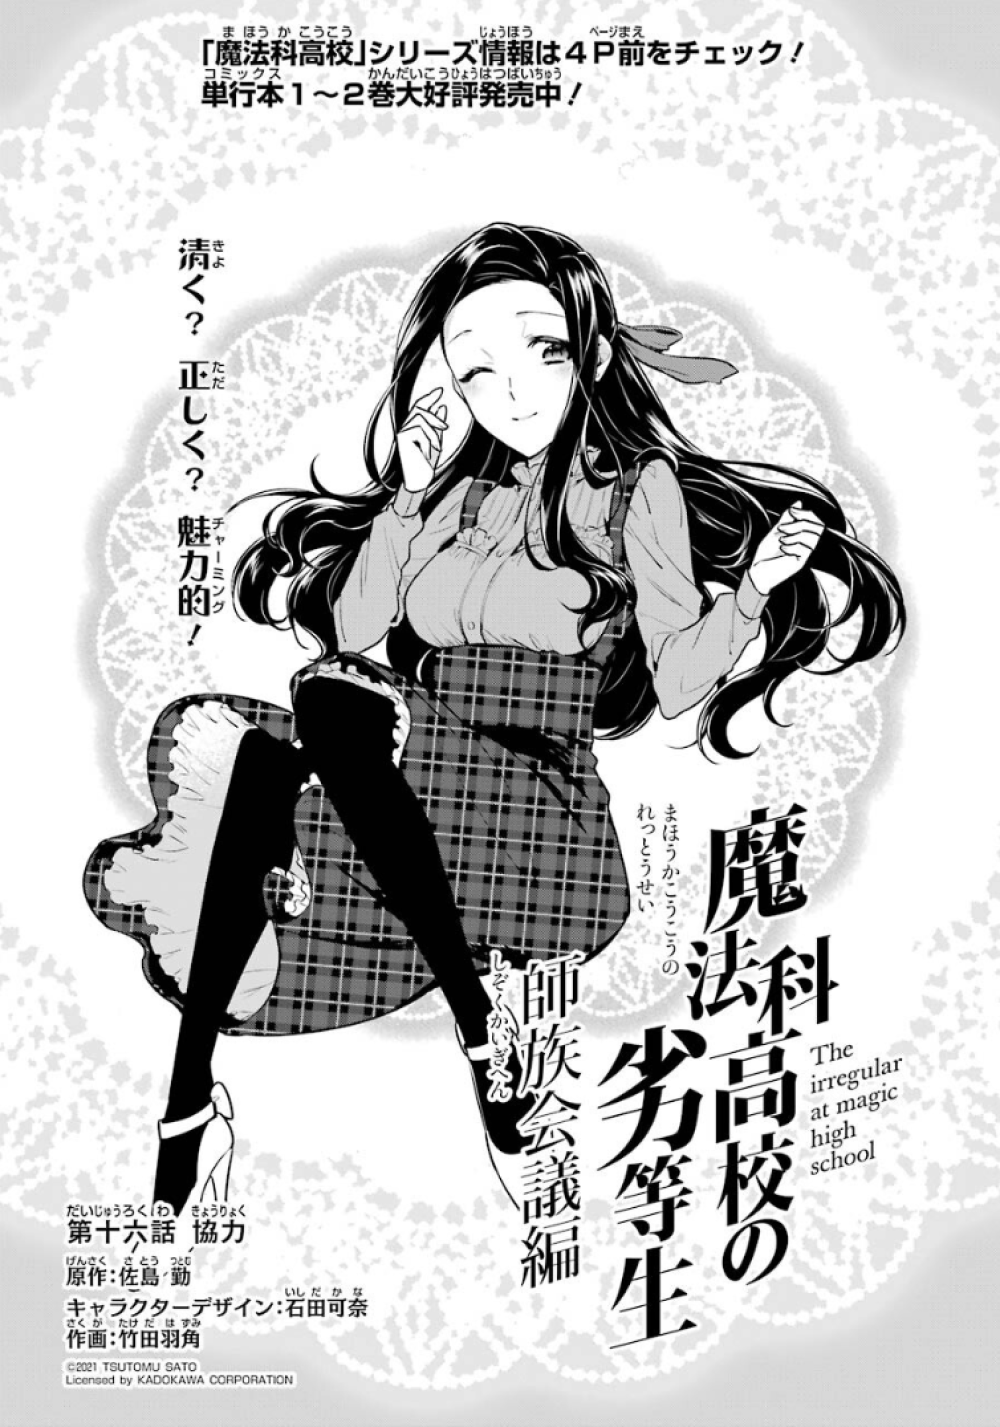 Mahouka Koukou No Rettousei Manga Master Clans Conference Arc Mahouka Koukou No Rettousei Wiki Fandom